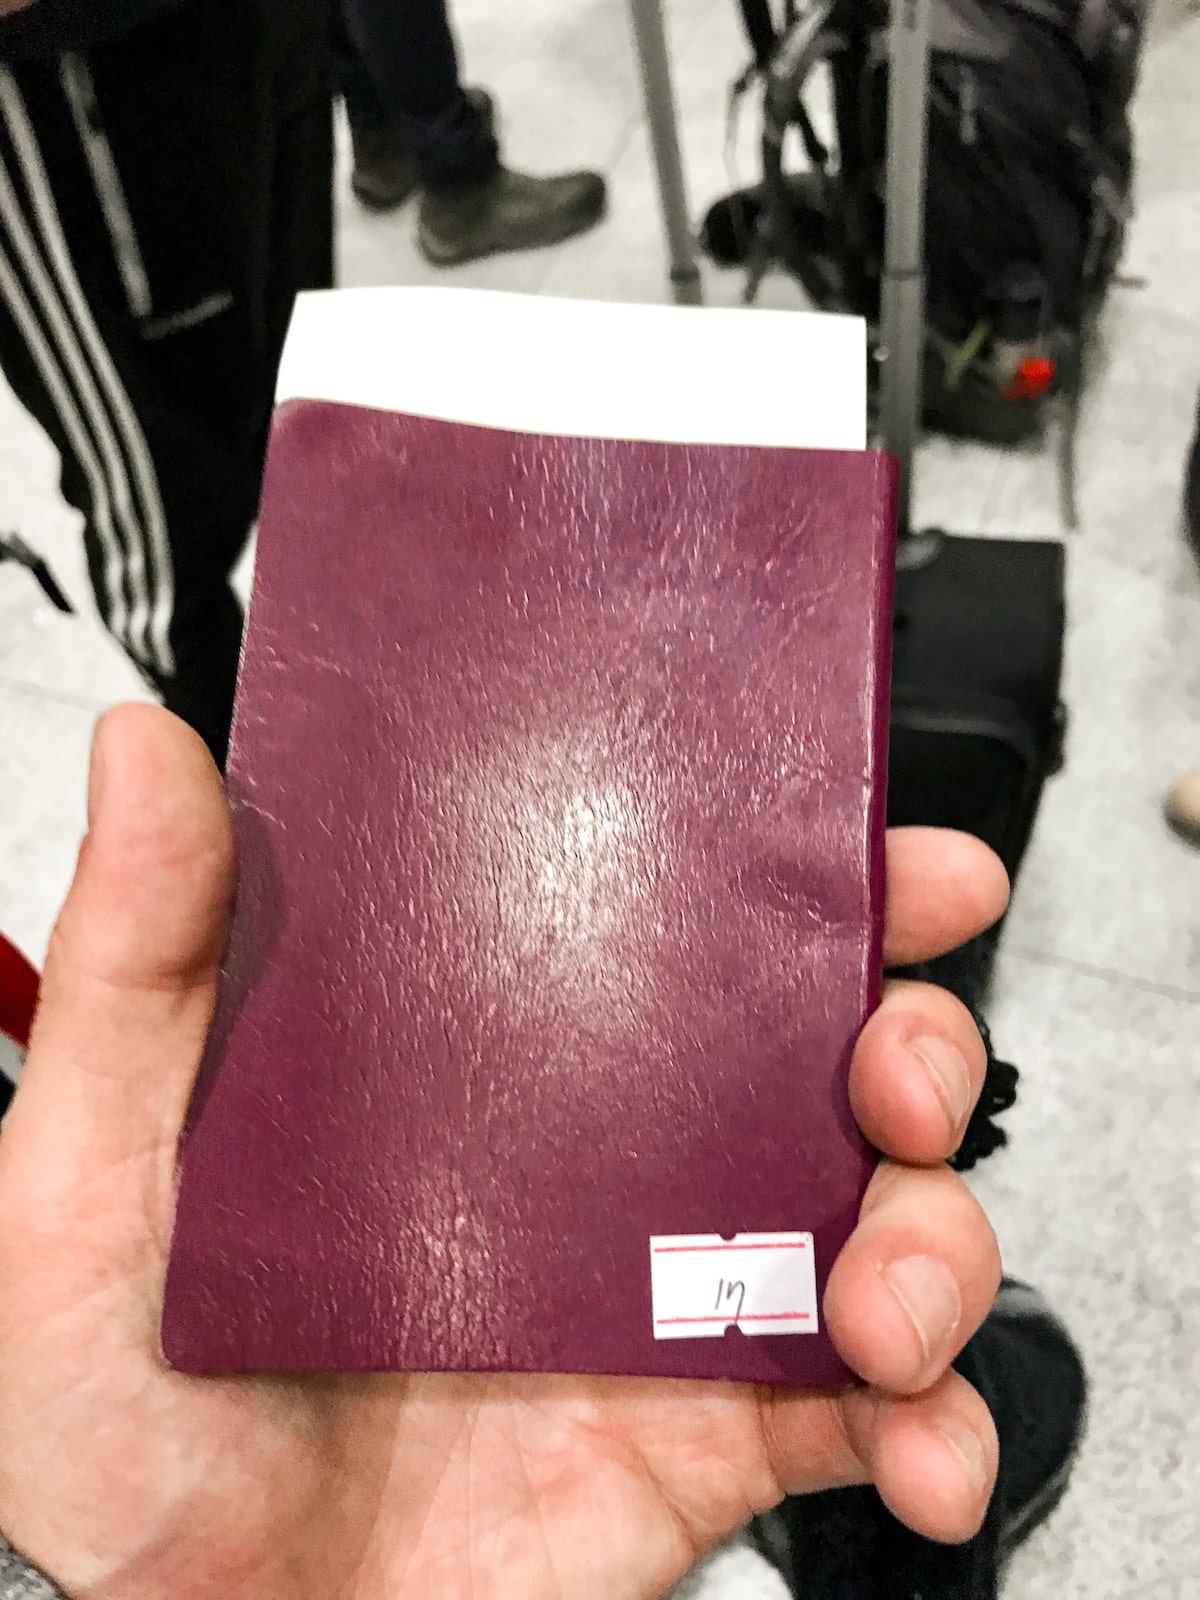 A purple passport in someone's hand